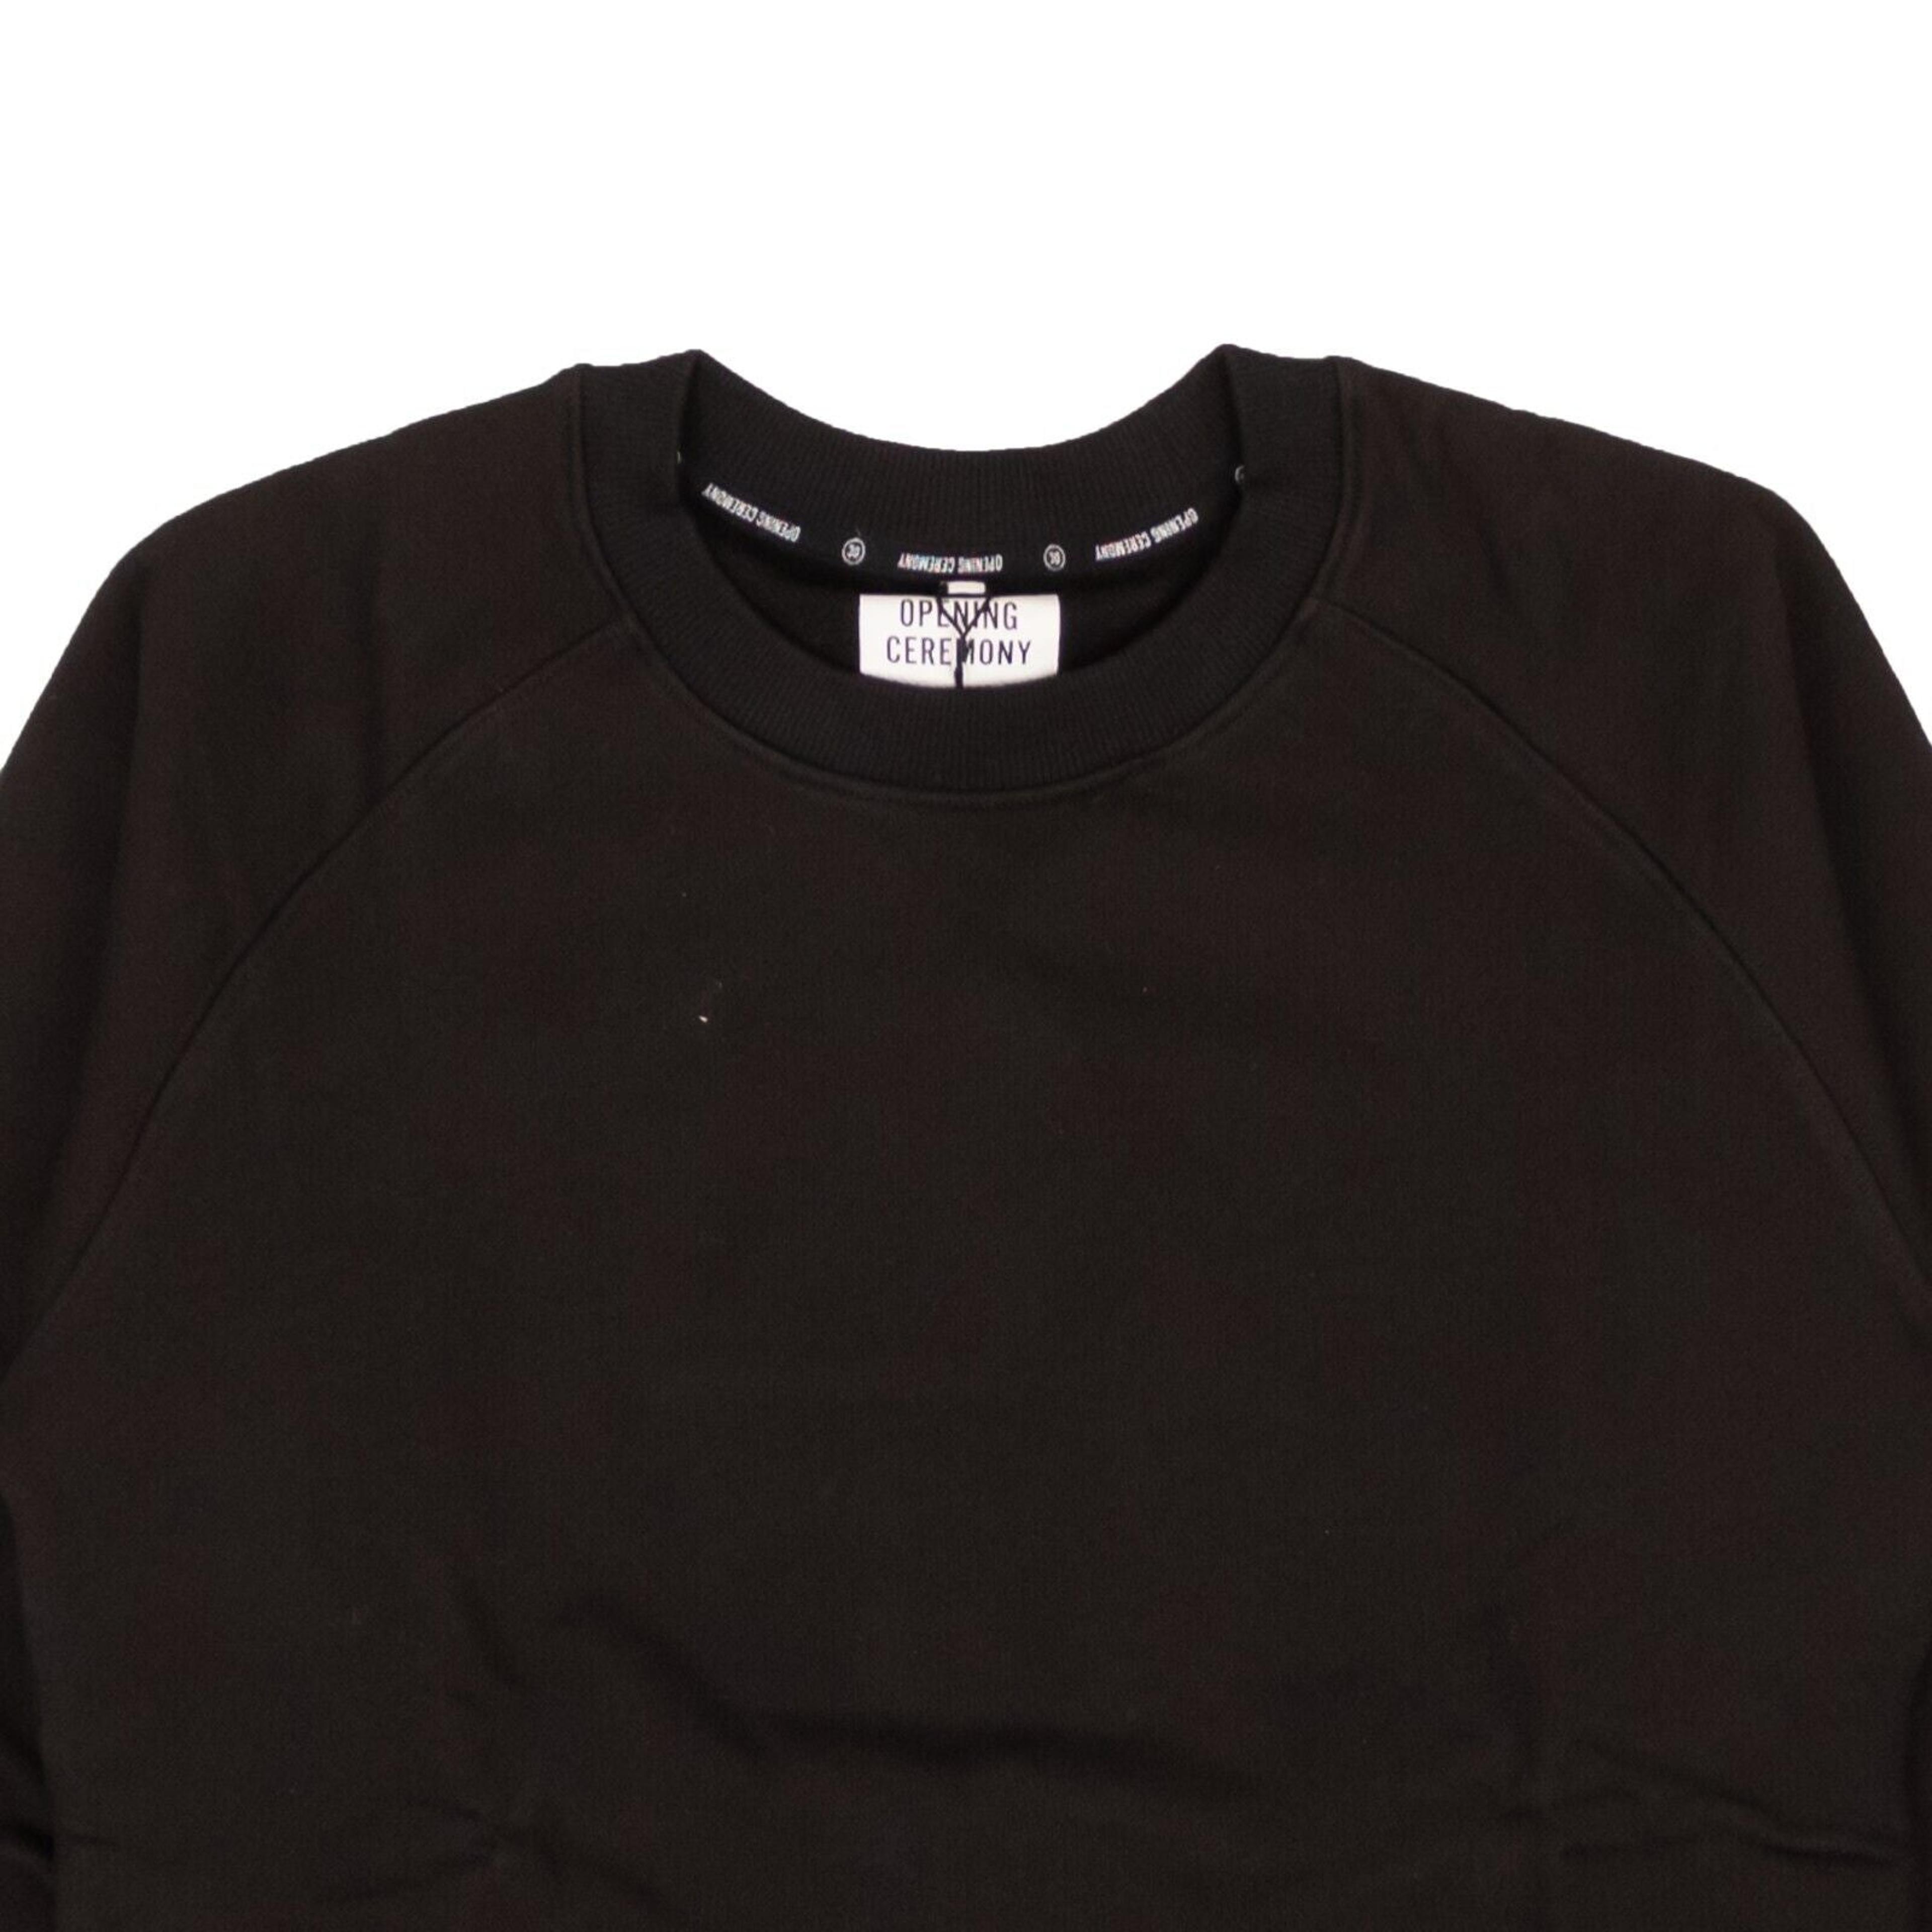 Alternate View 1 of Black Cotton Blank Raglan Sweatshirt